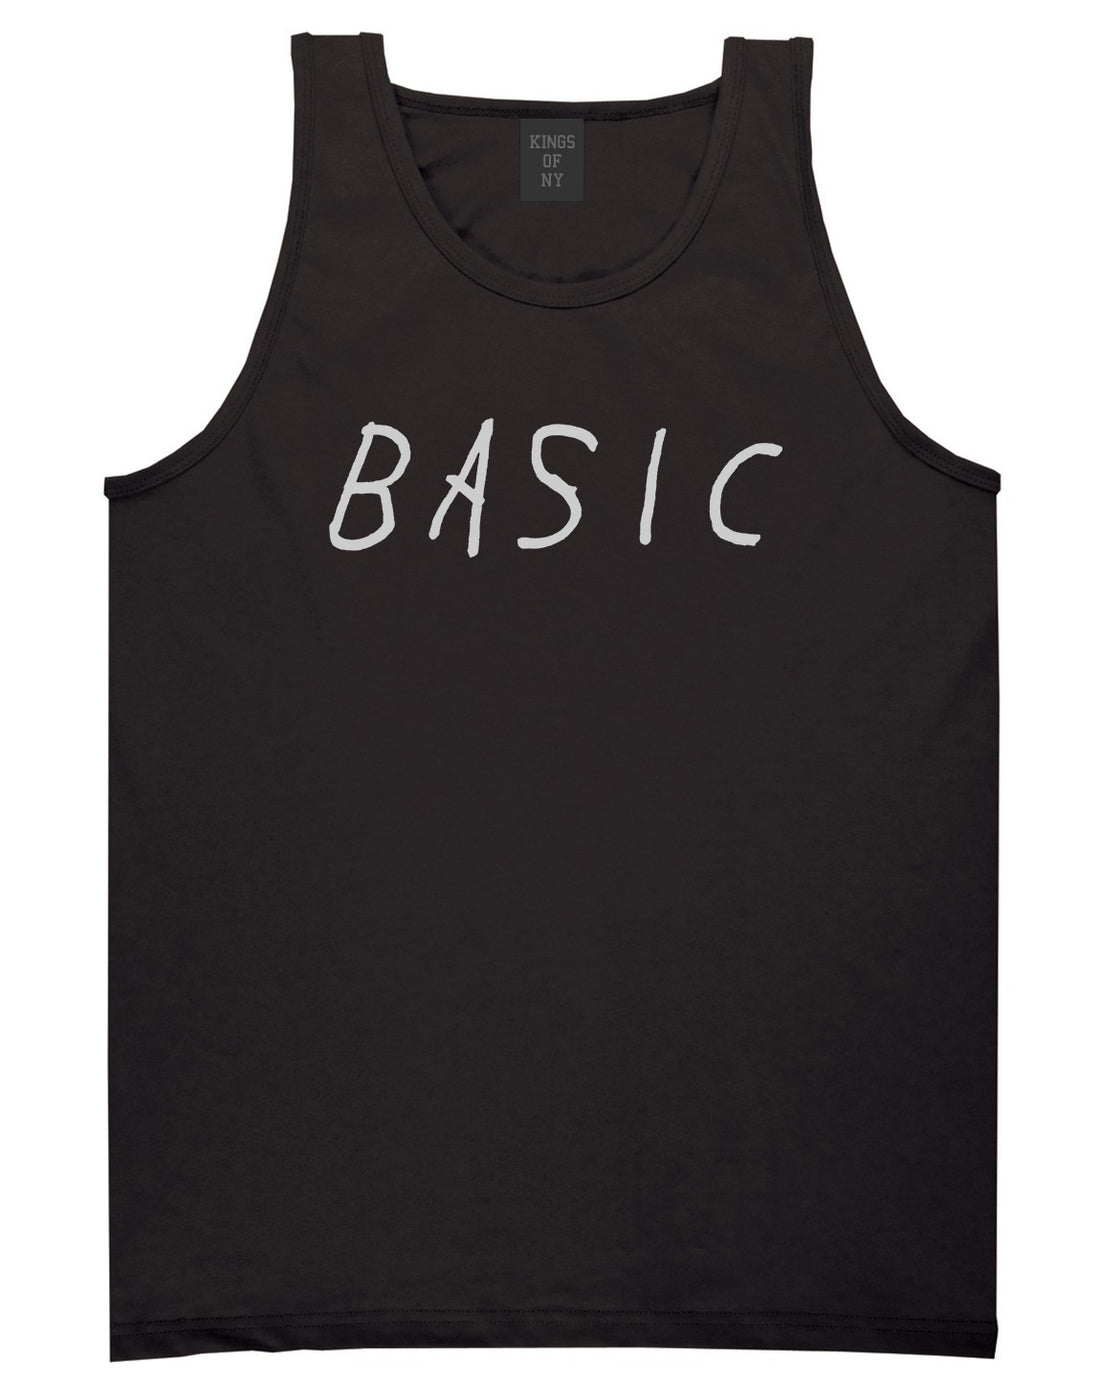 Basic Plain Black Tank Top Shirt by Kings Of NY